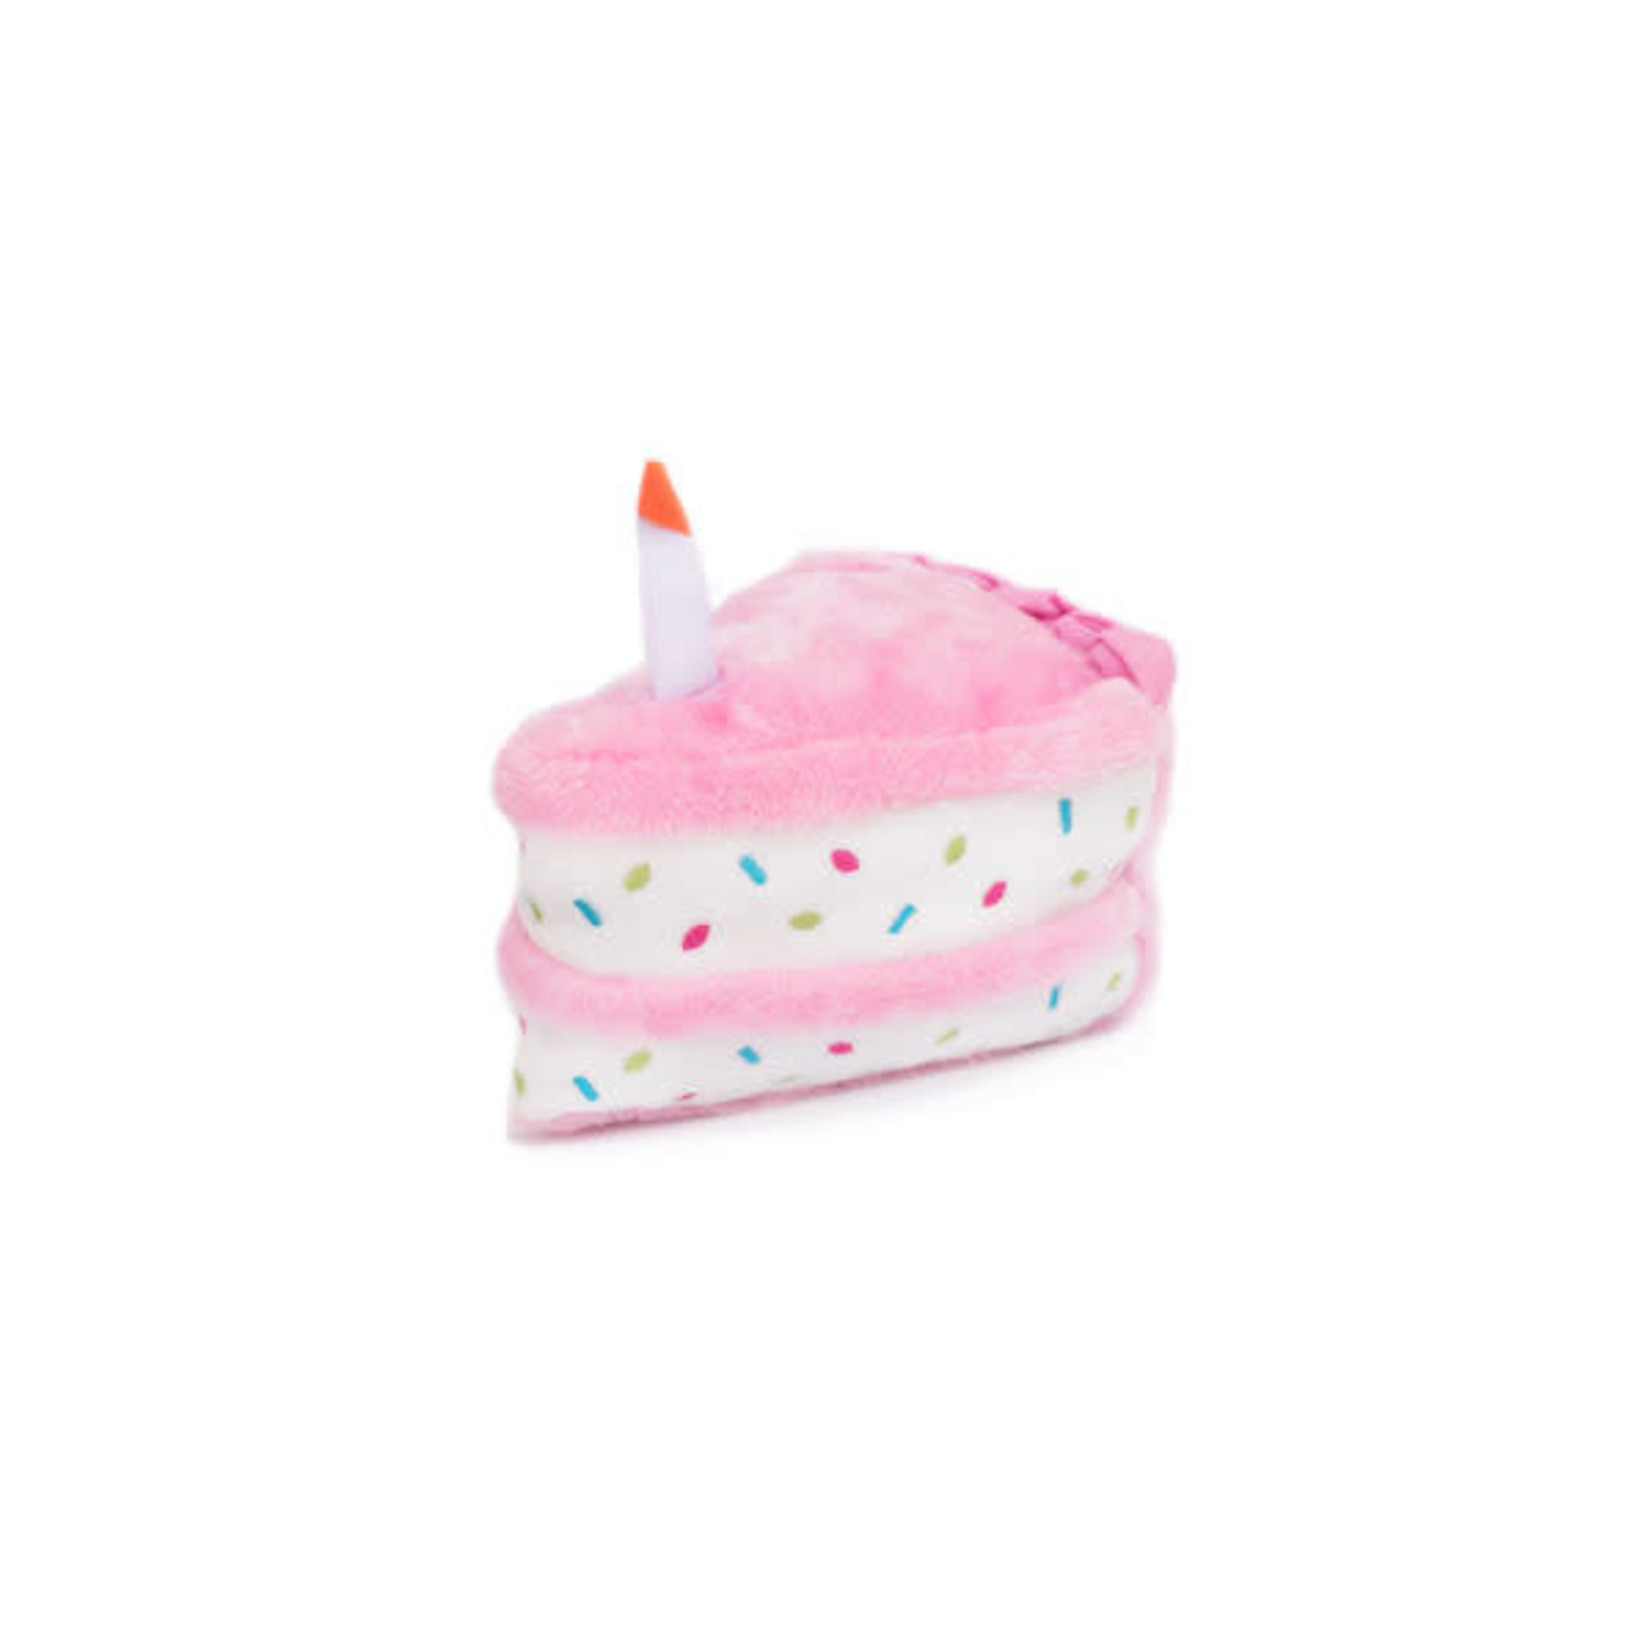 Zippy paws ZP Birthday Cake Squeaker Pink